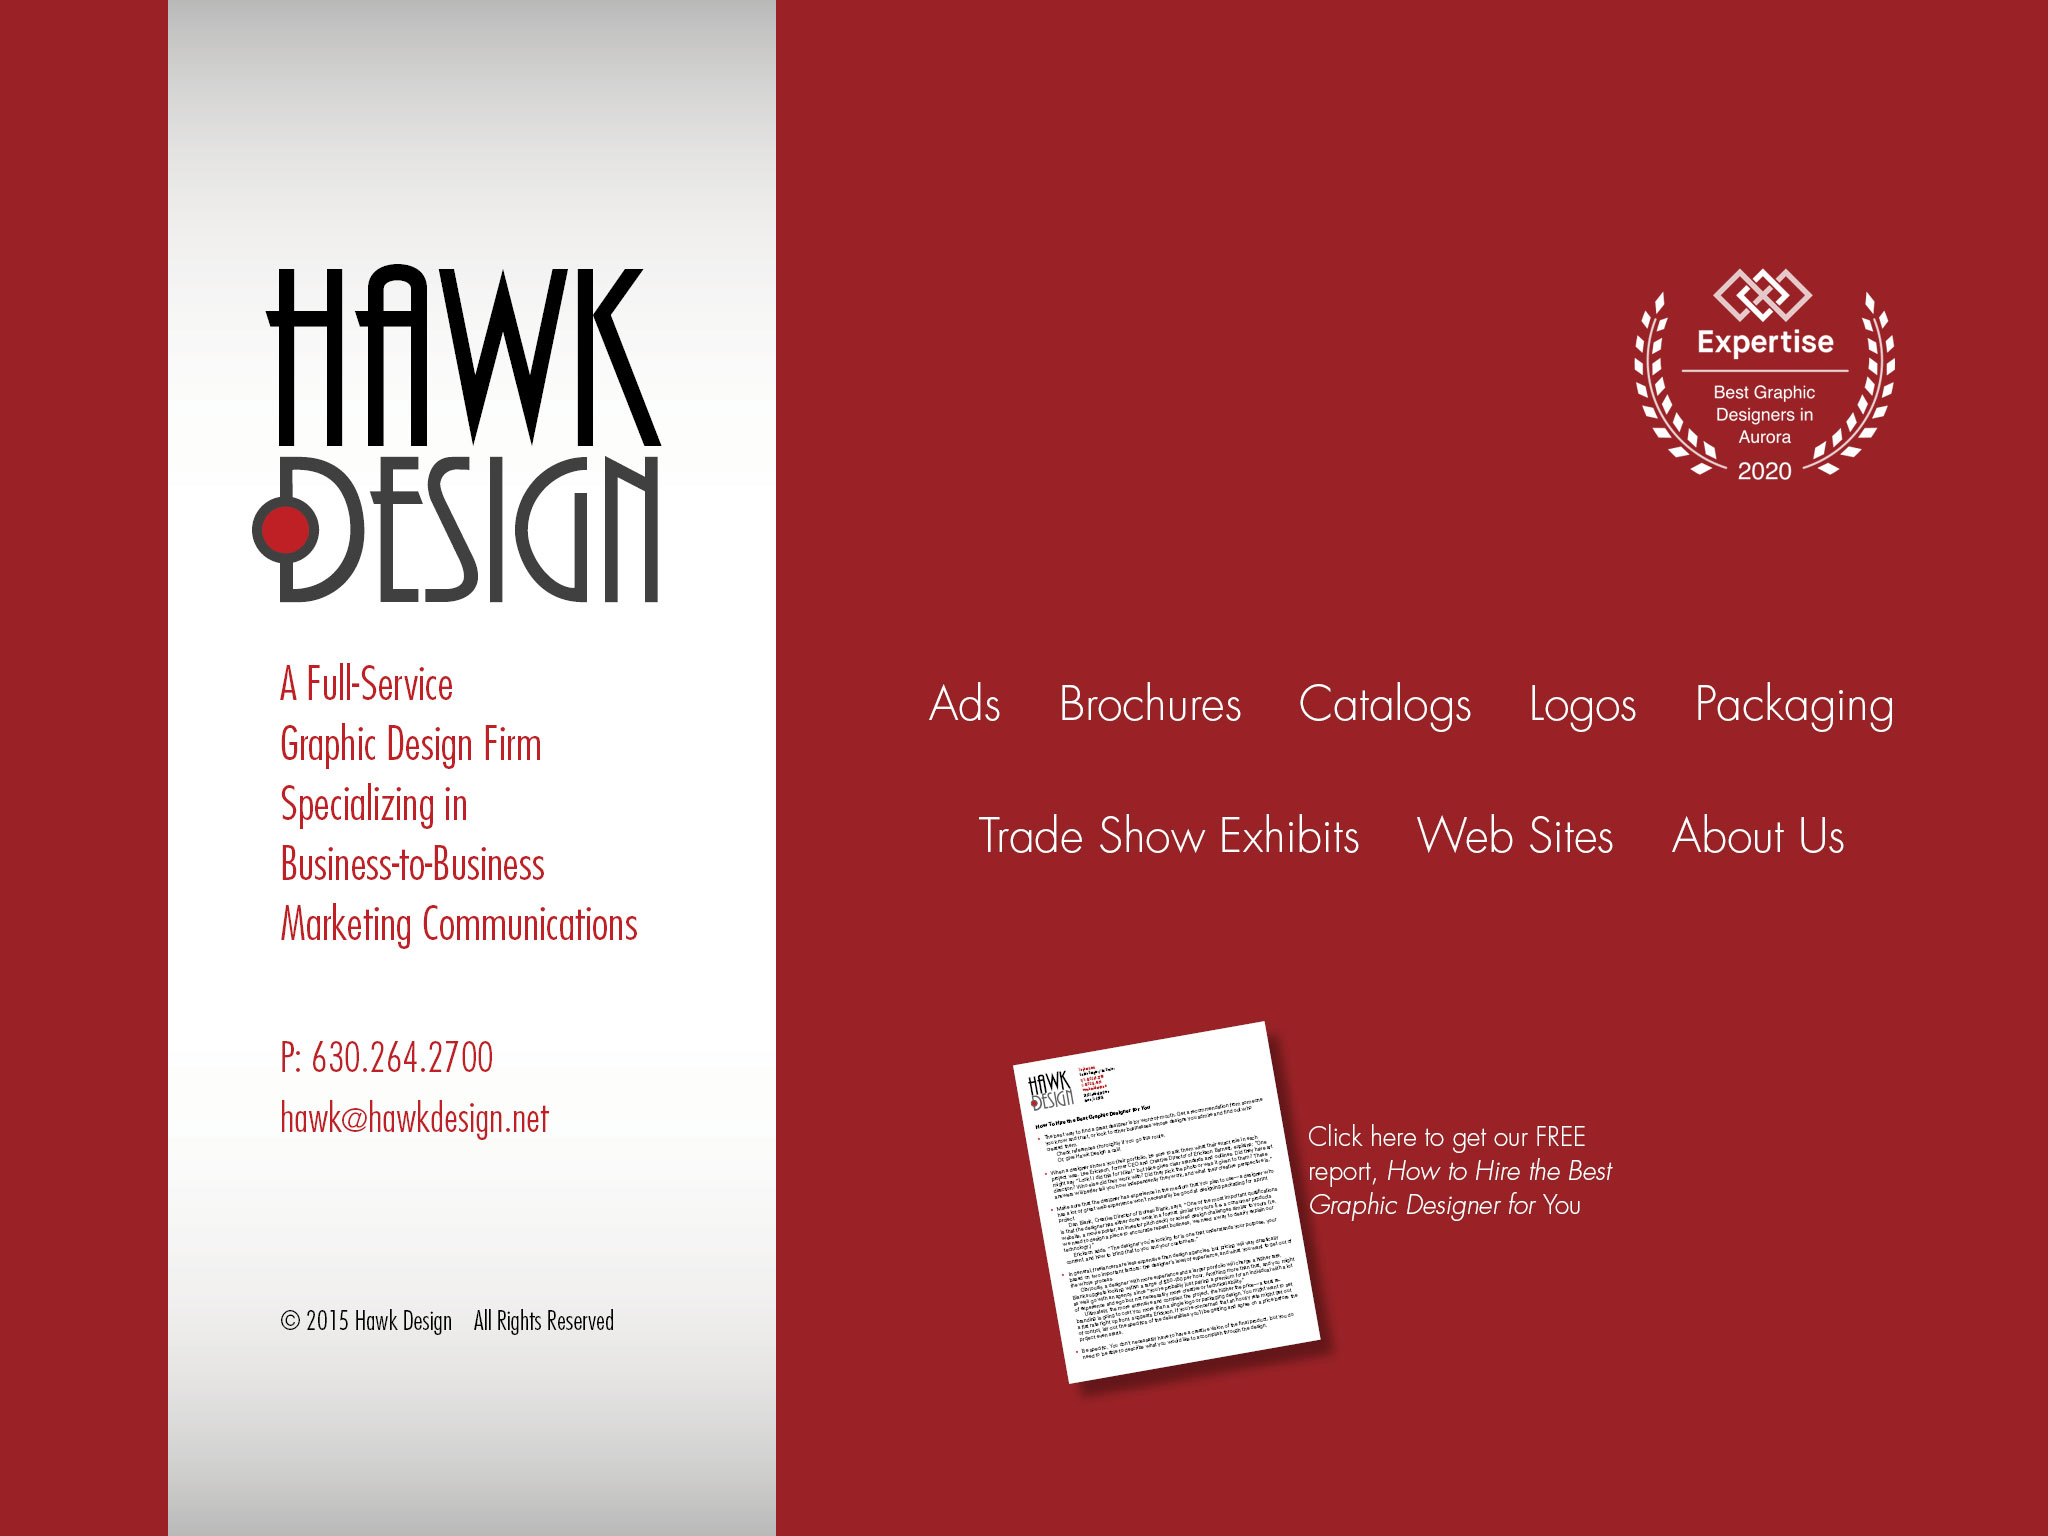 Hawk Design